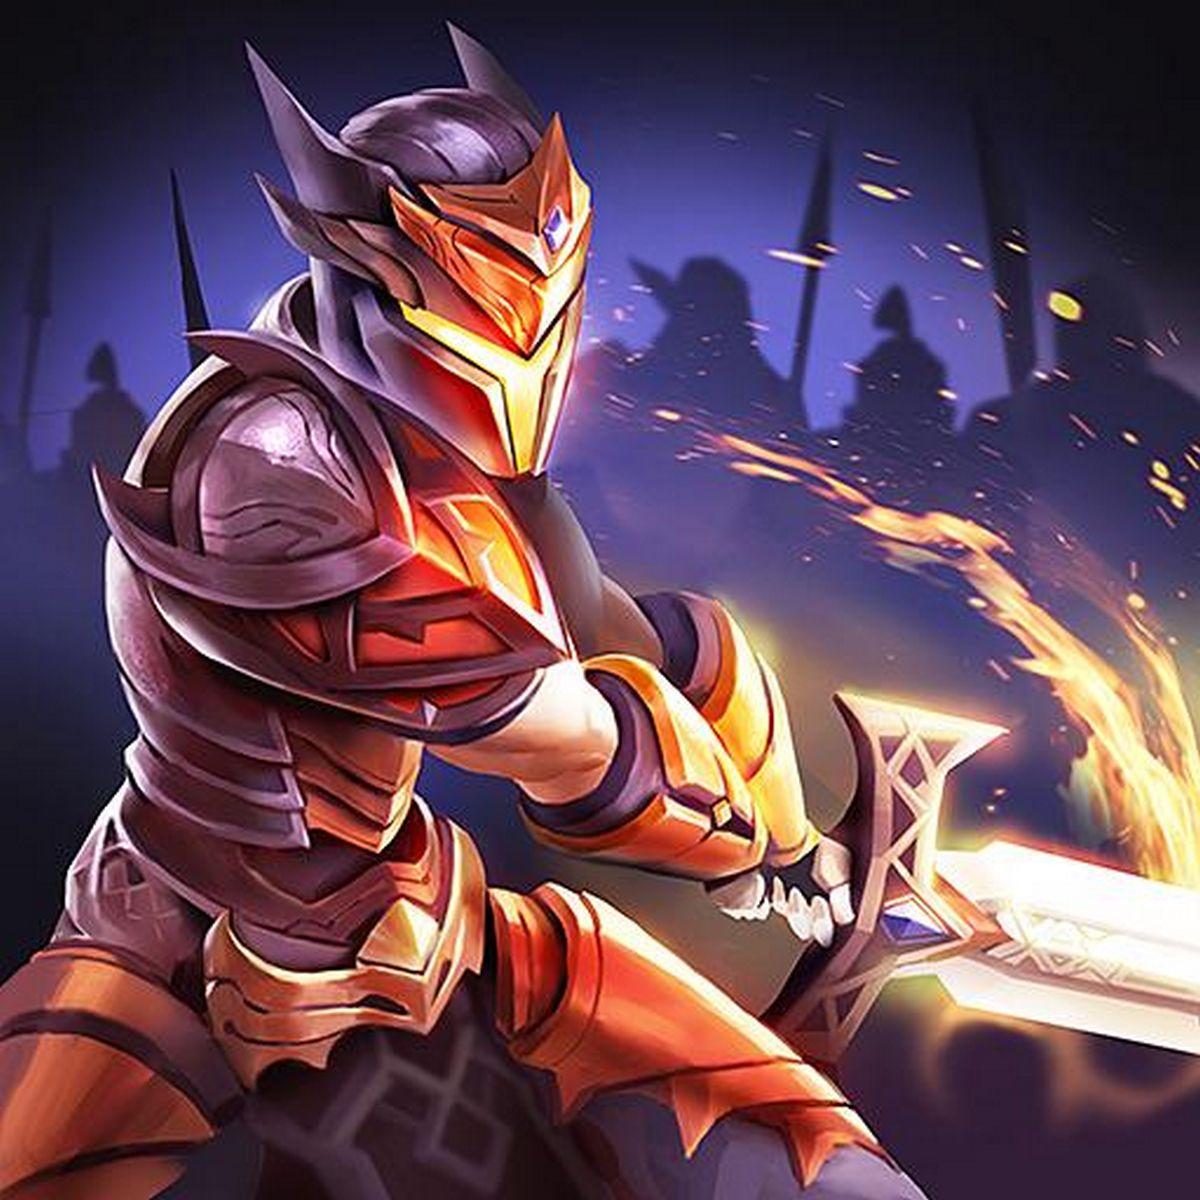 Epic Heroes War APK MOD v1.11.3.445 (Dinero infinito)